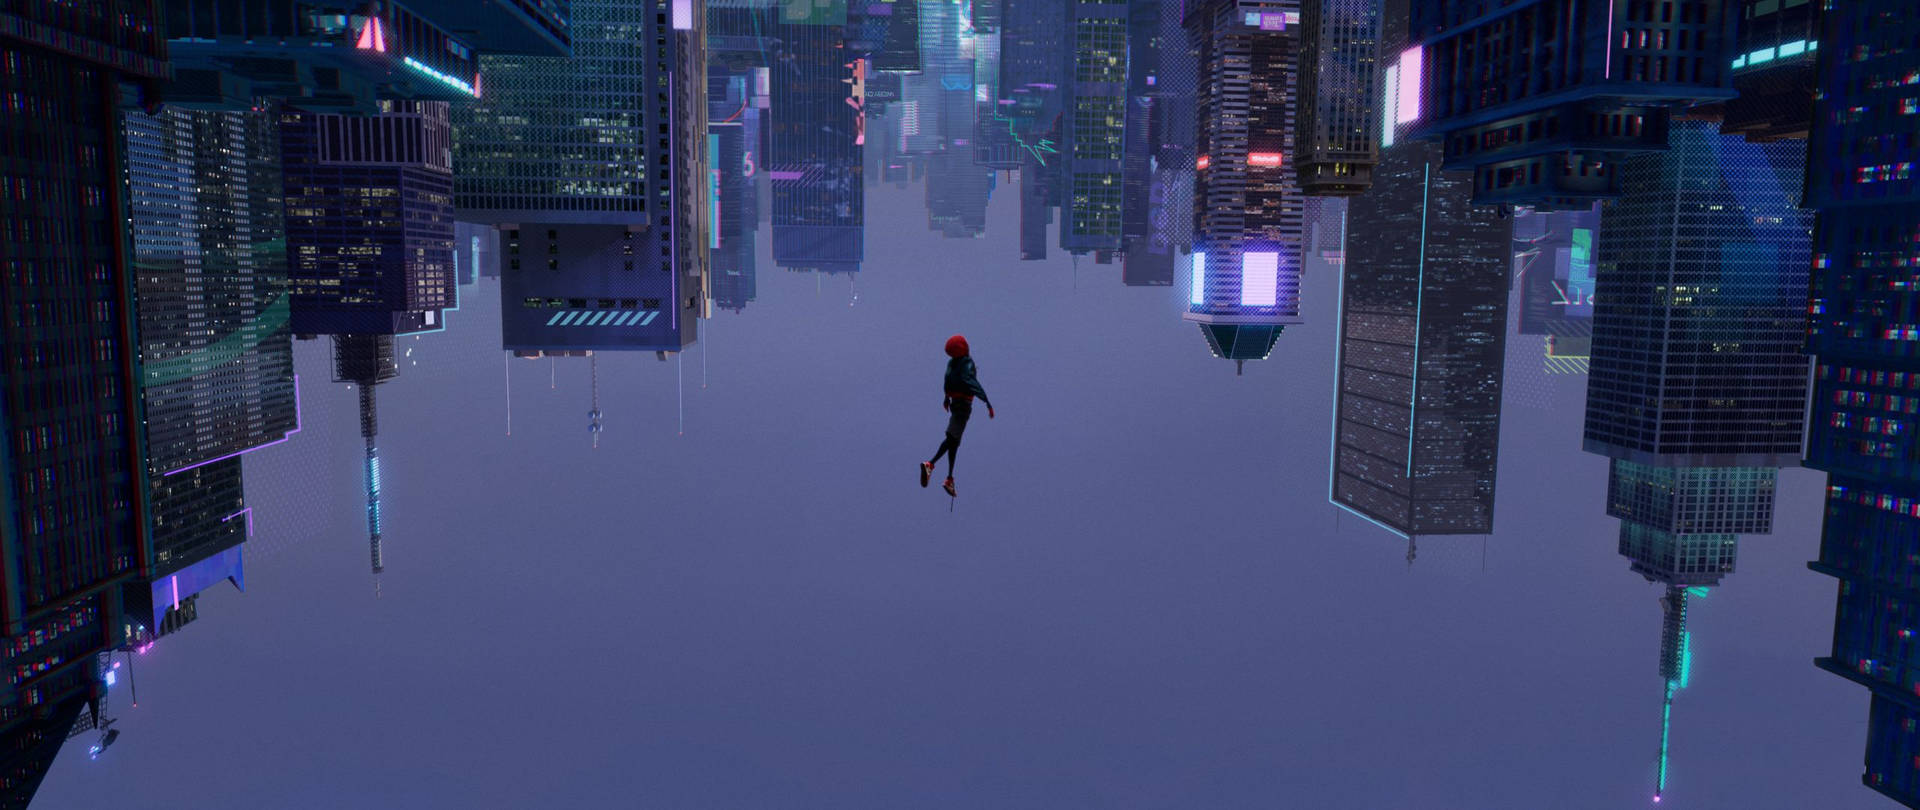 Spiderman Falling Down